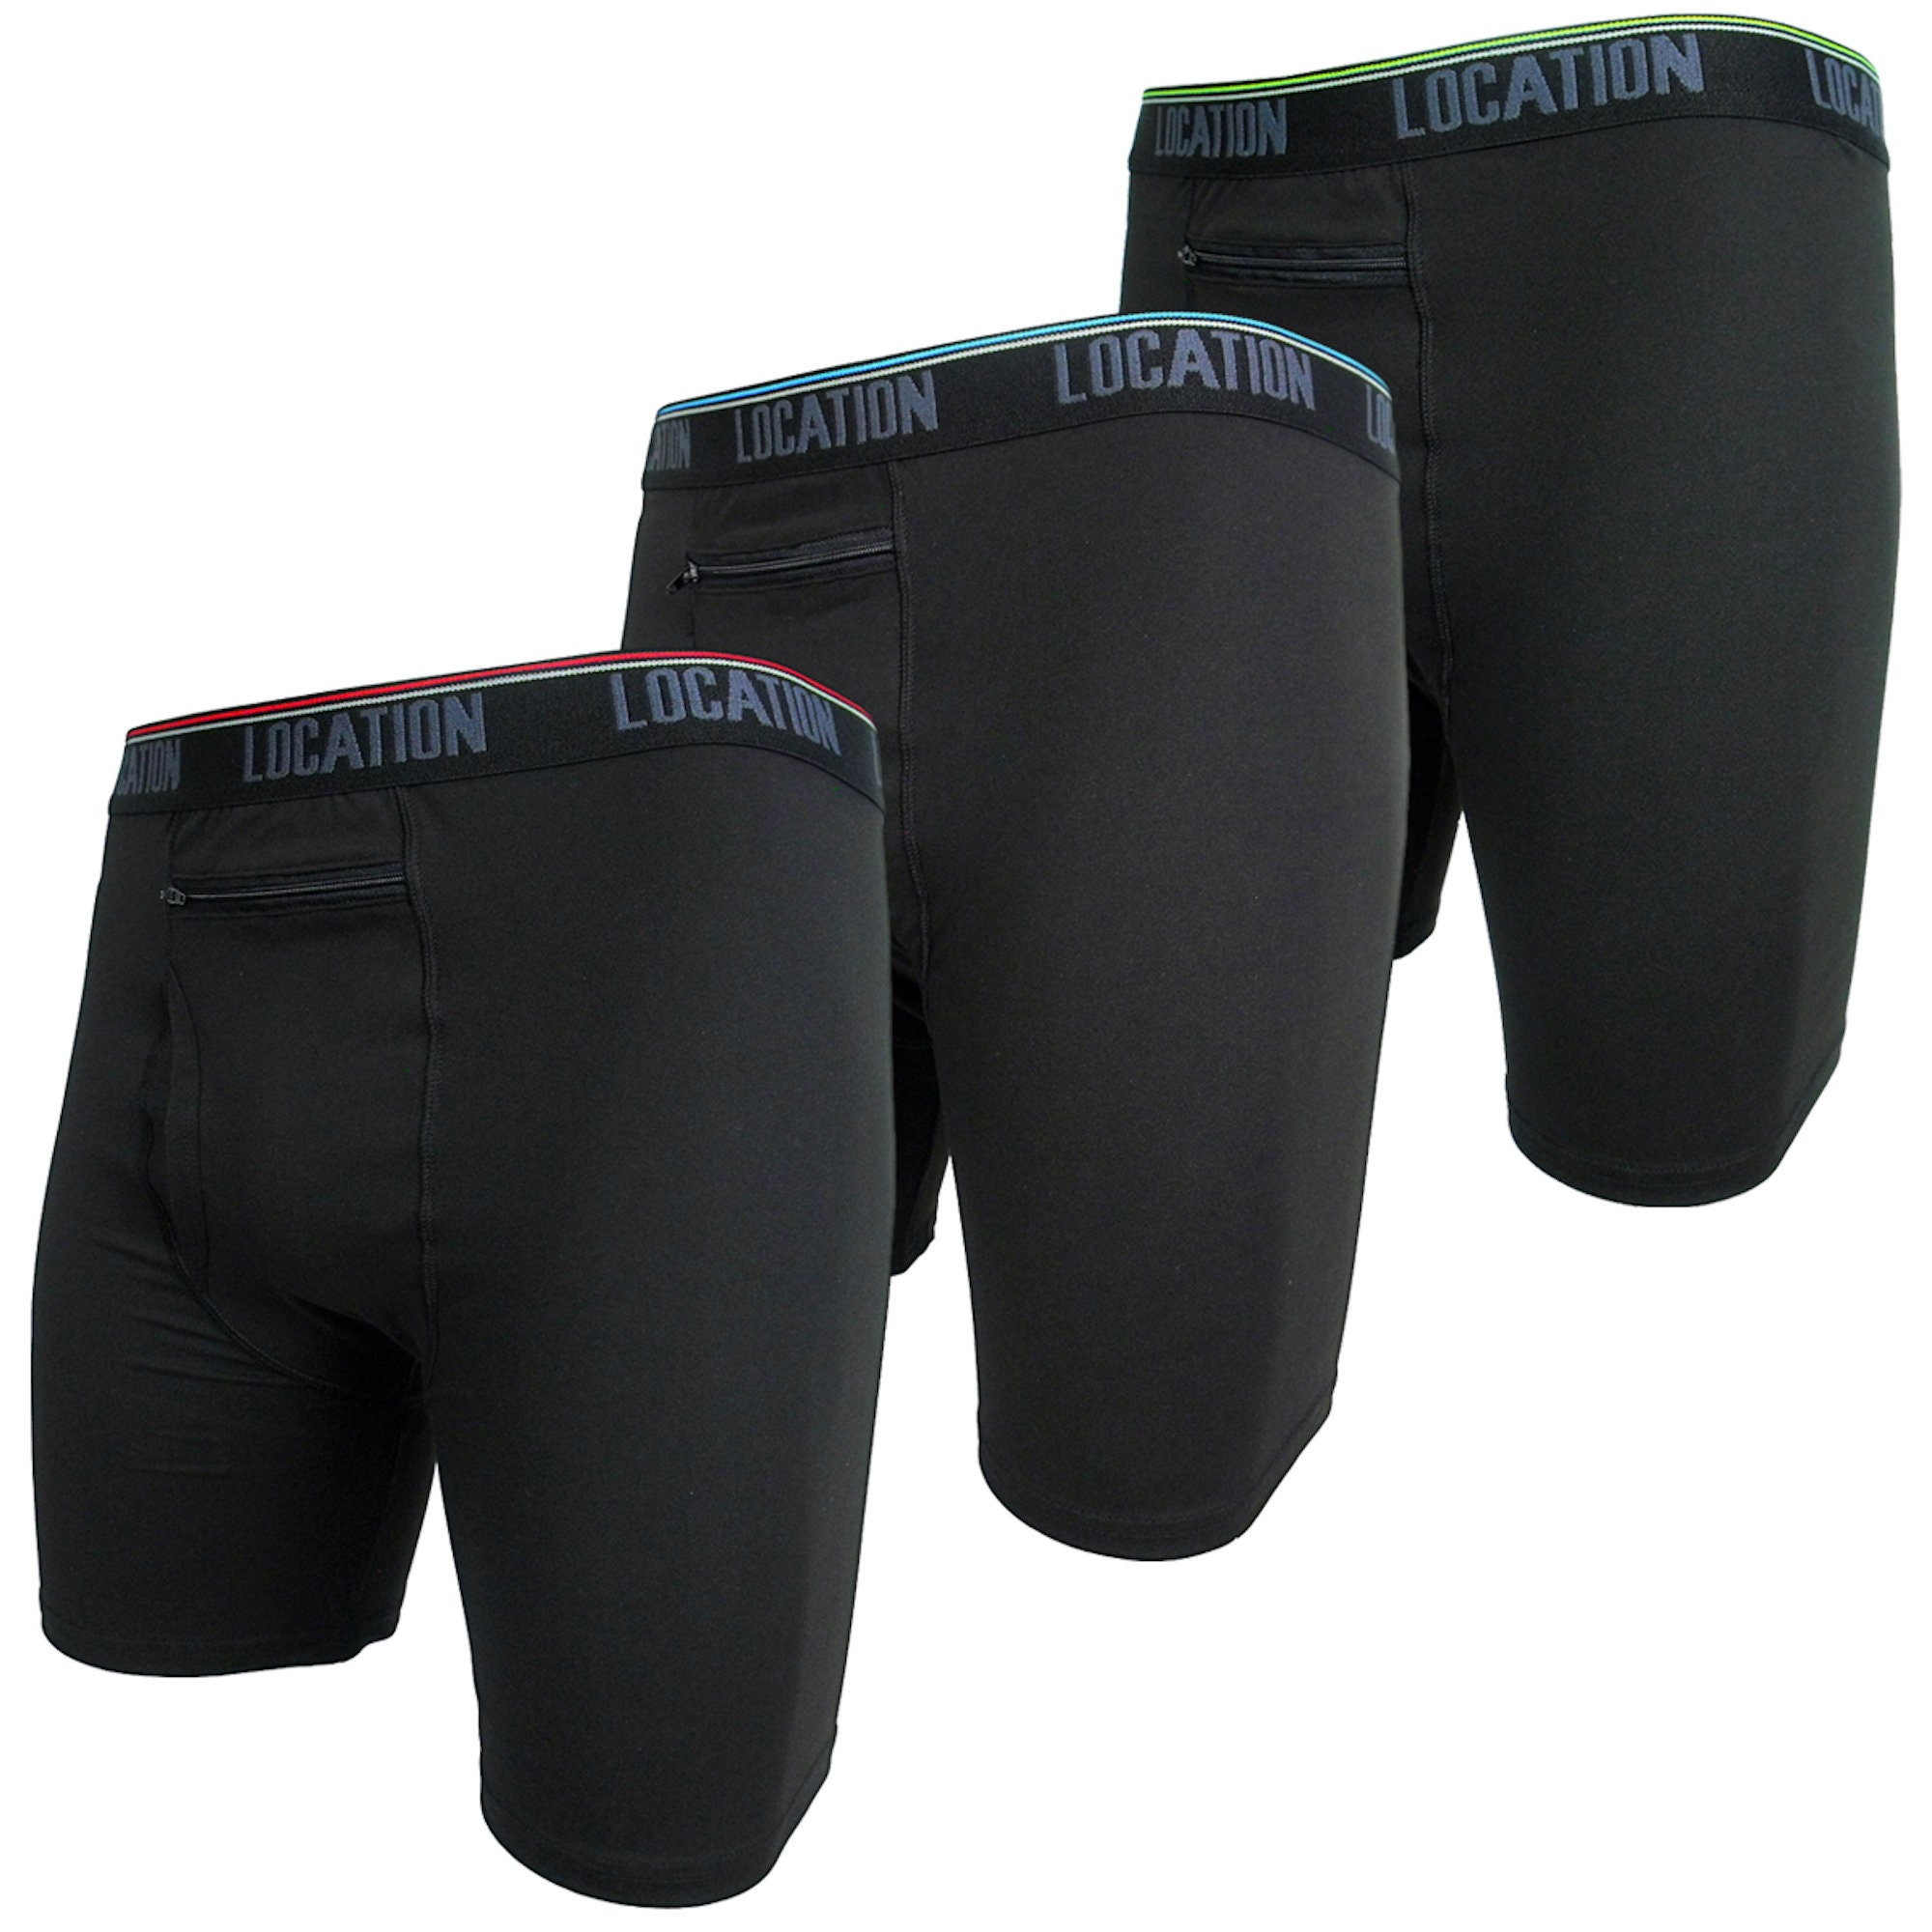 Mens Longer Leg Boxers Underwear Challenger3 & 1 3 Pack Stash Pocket Zipped  Front Pocket Anti Chafing Stretch Cotton Feel Comfort Sport 